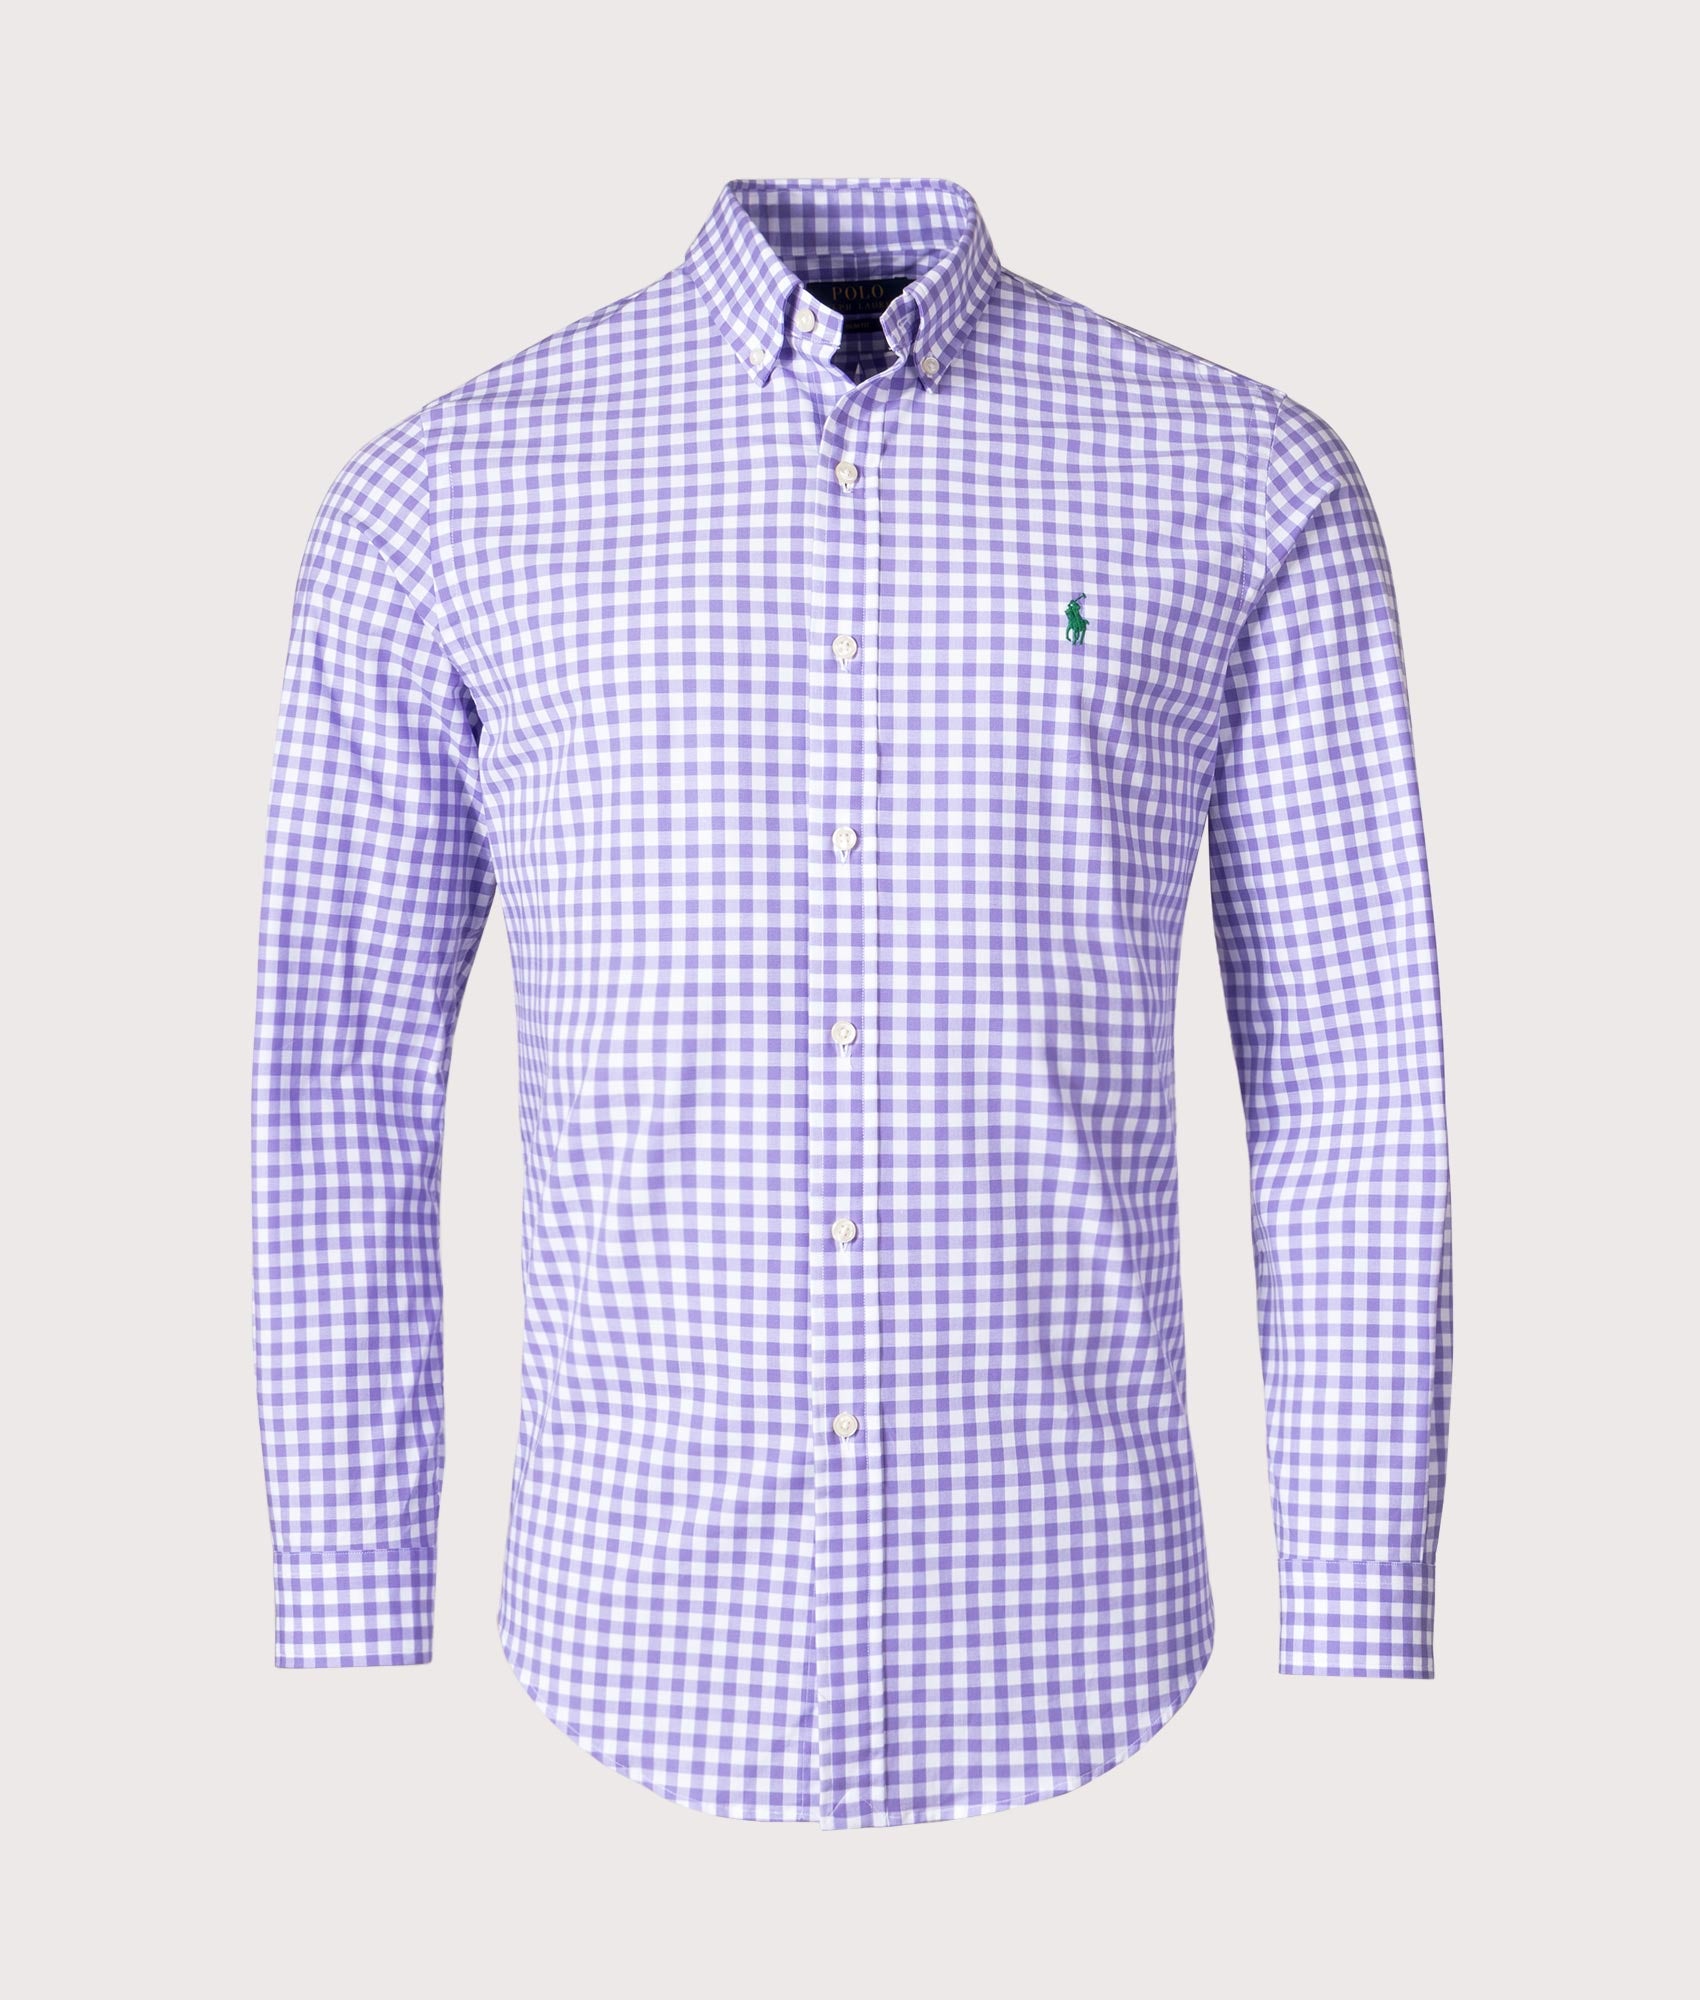 Plain Weave Shirt HamptonPurple/White | Polo Ralph Lauren | EQVVS